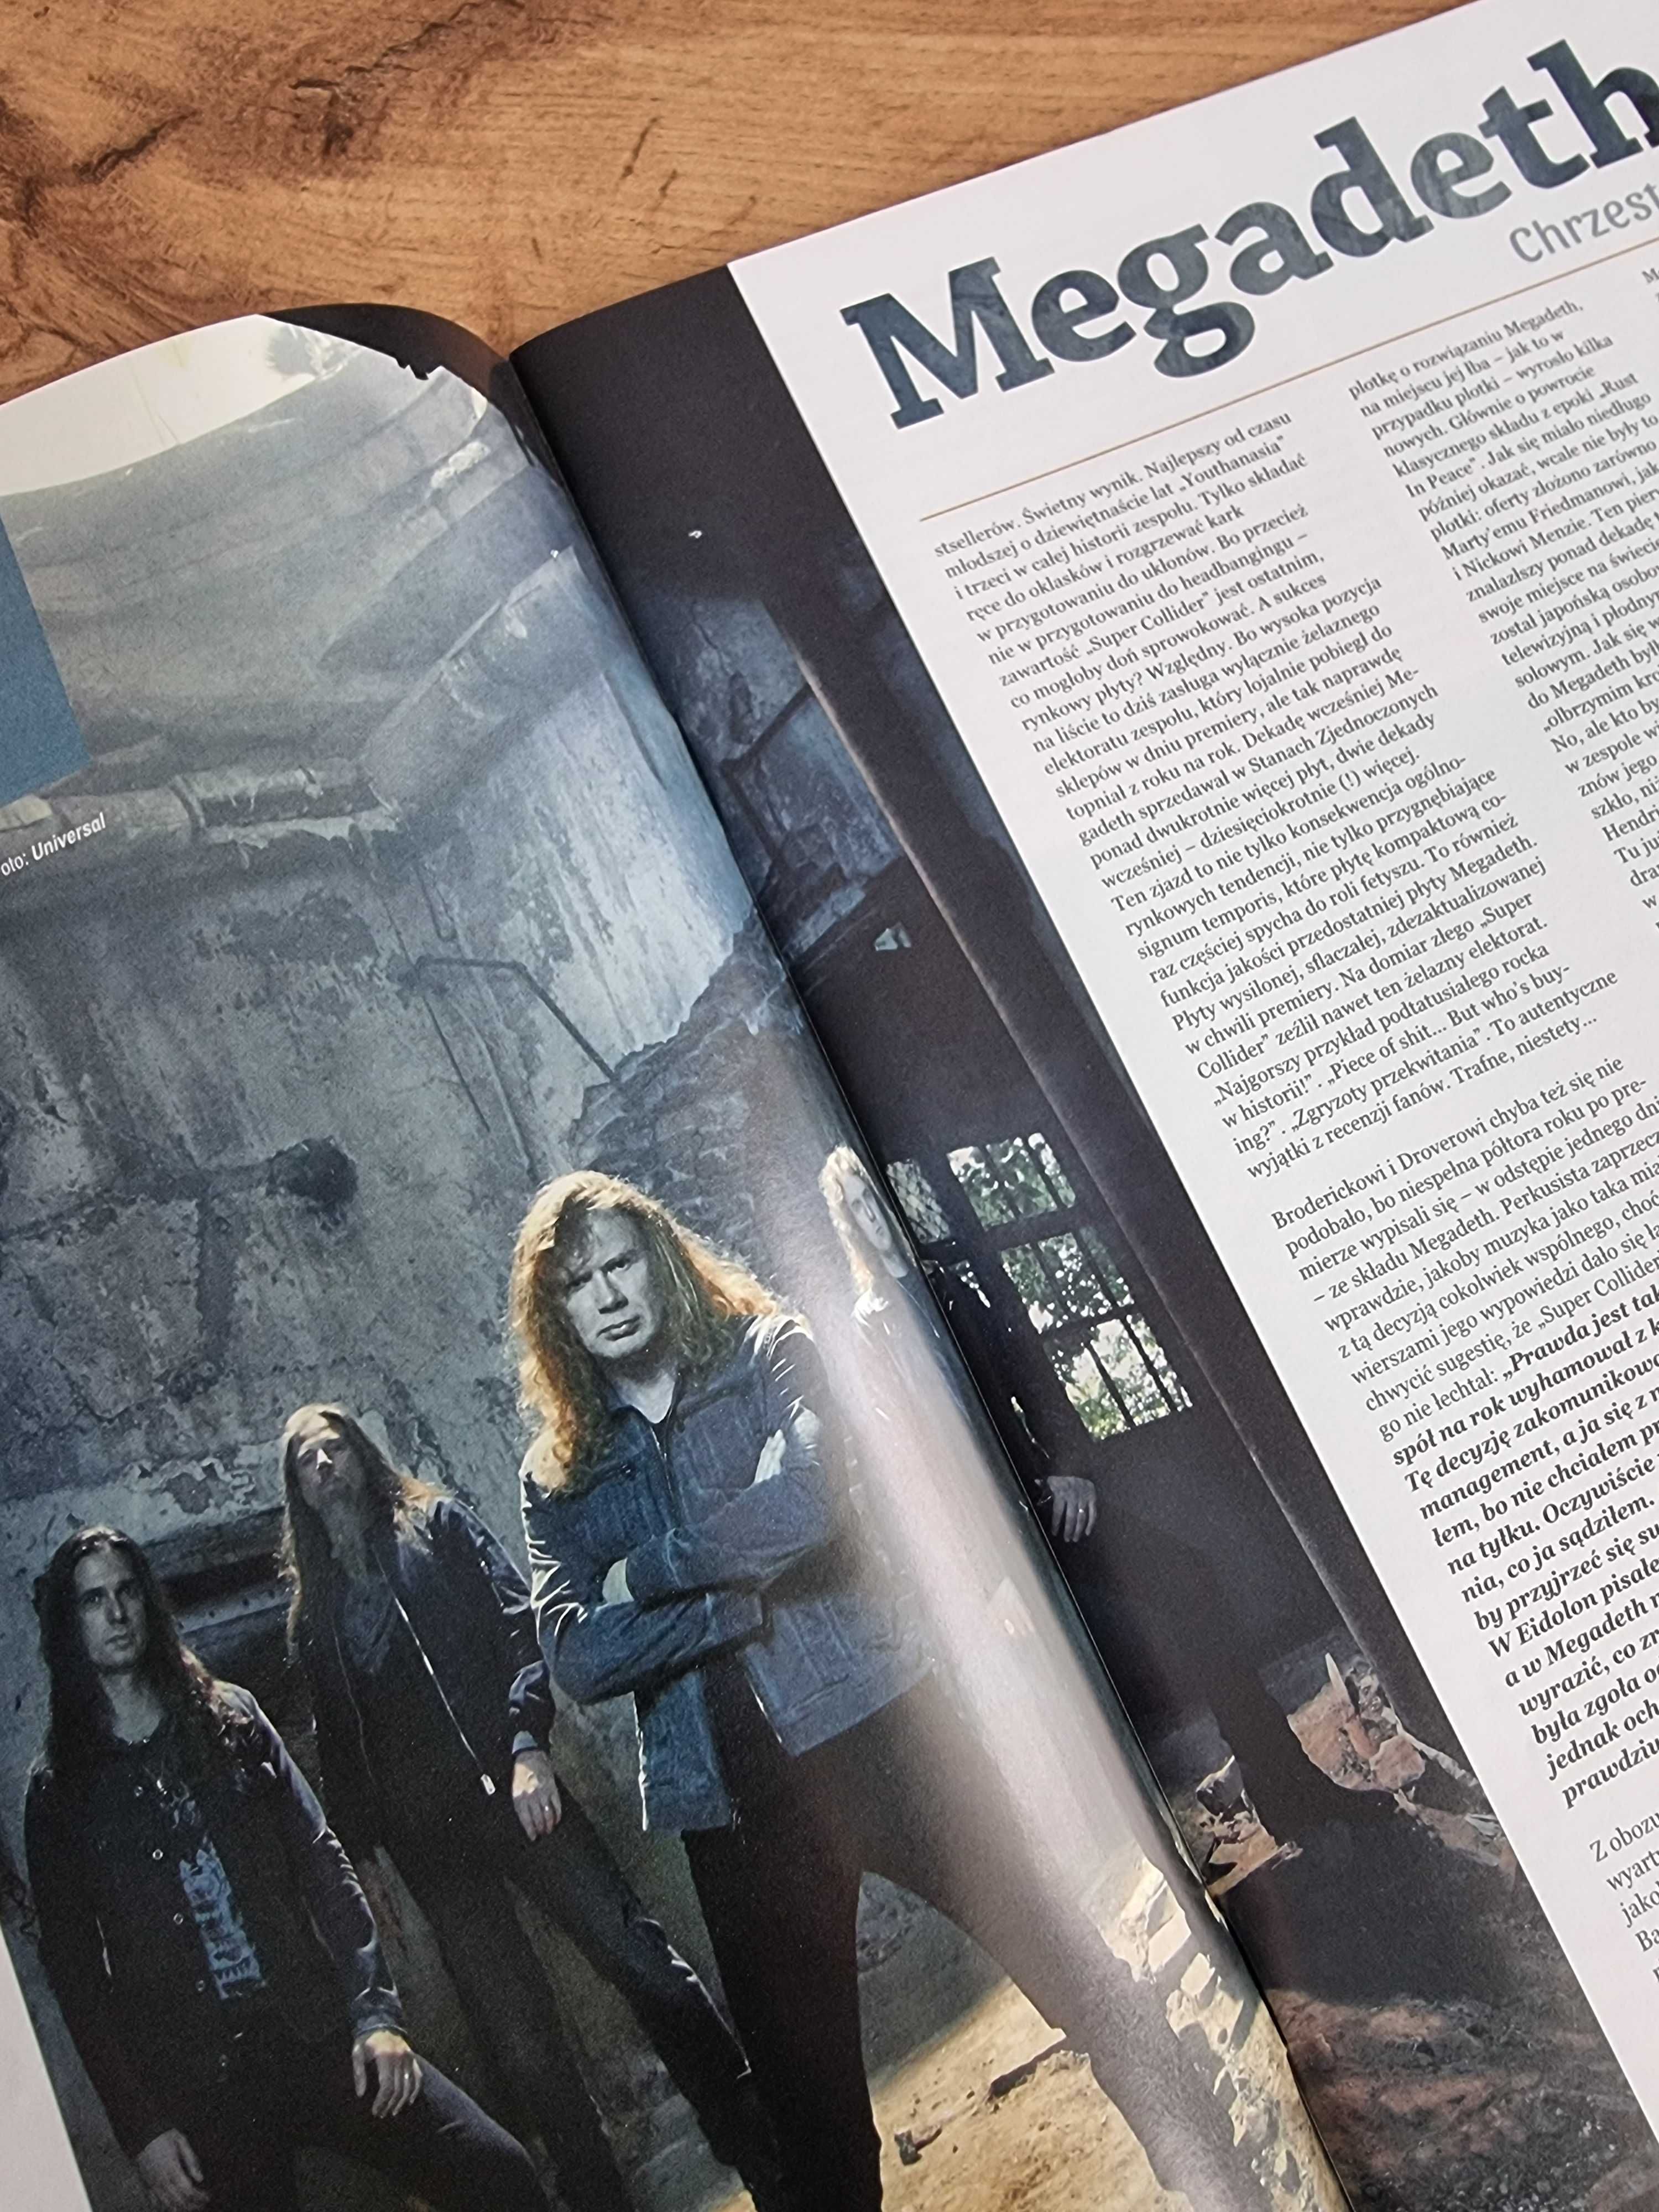 Metal Hammer 2016 - Megadeth, Plakaty: Rival Sons i Lemmy